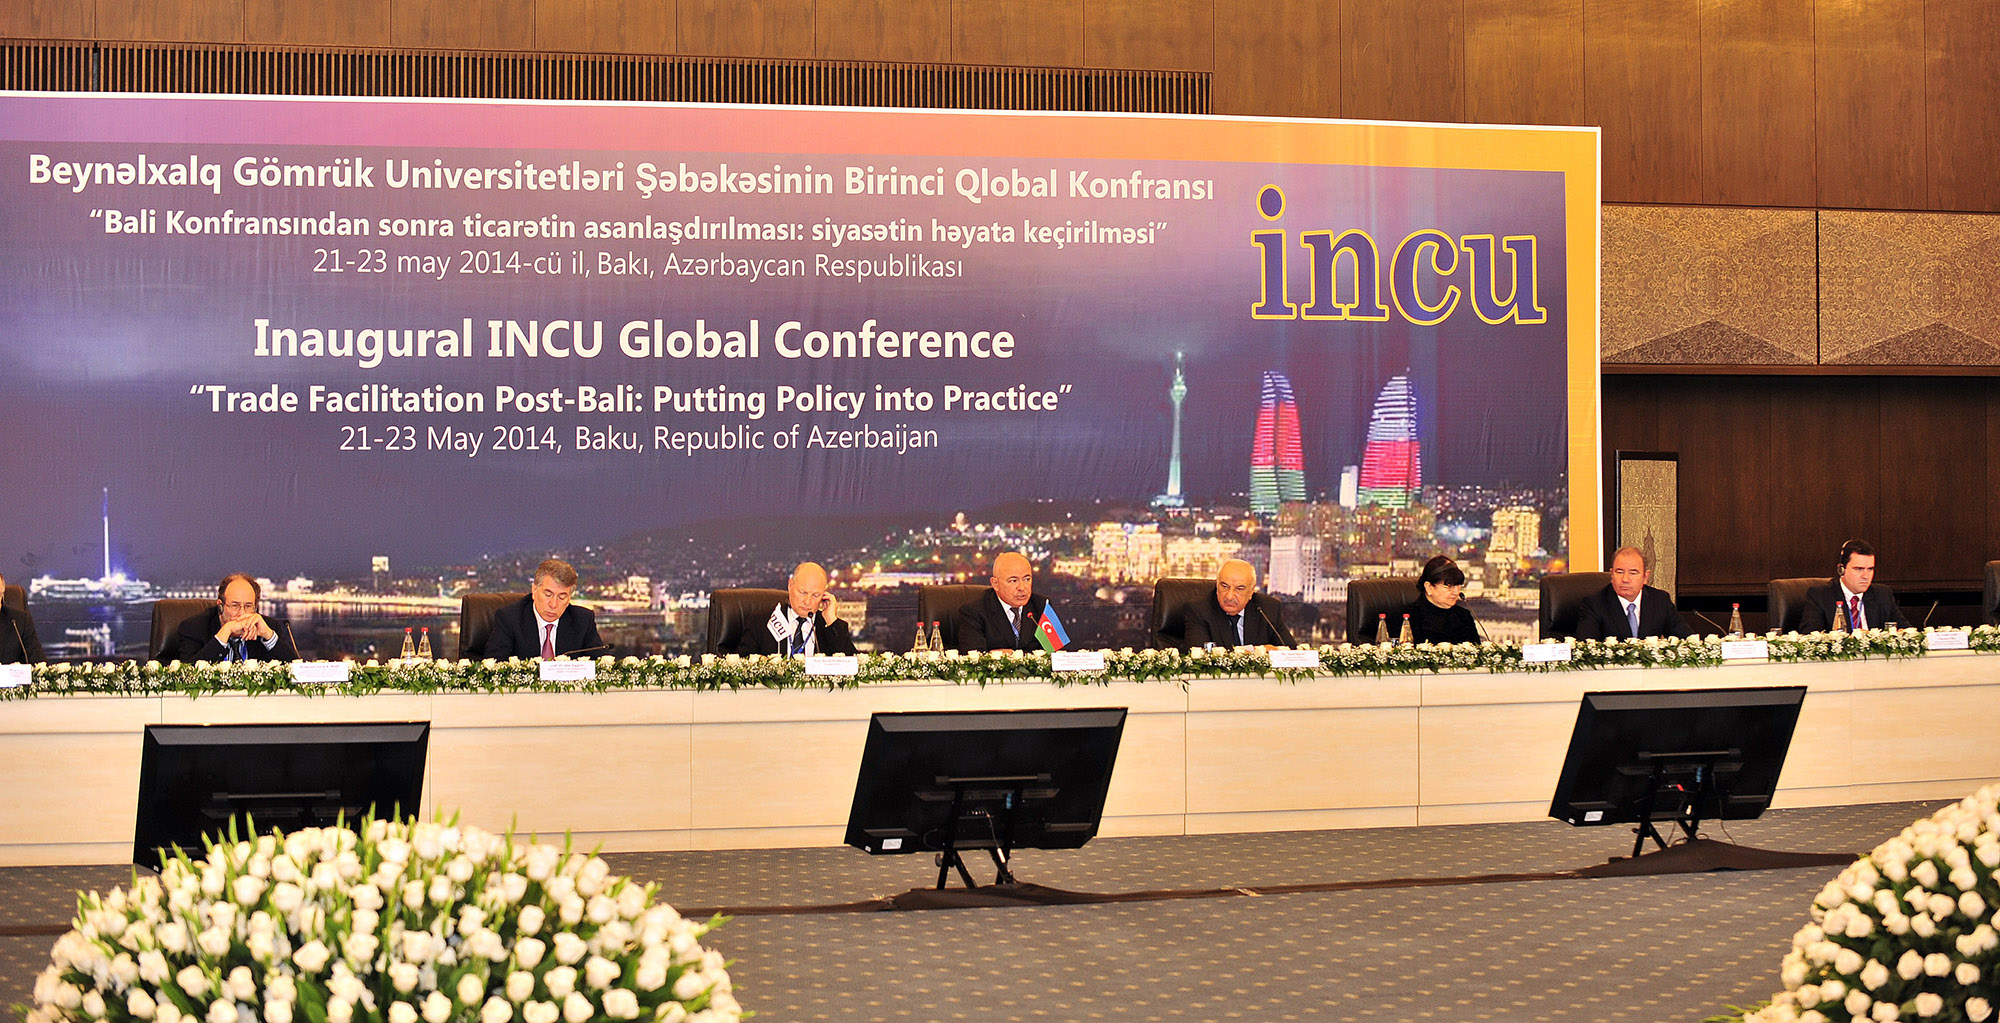 INCU Global Conference underway in Baku